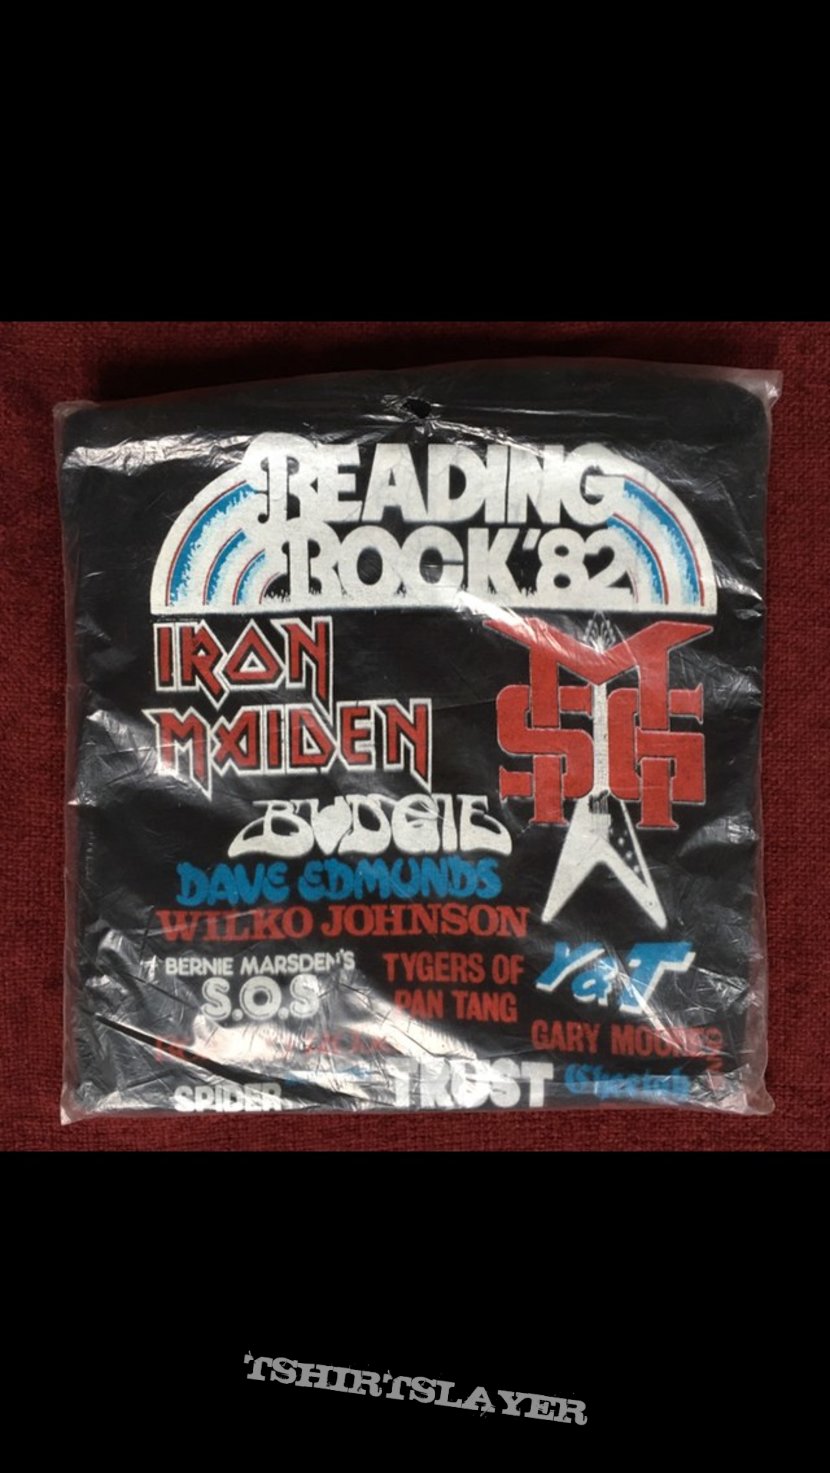 Reading rock festival Iron Maiden 1982